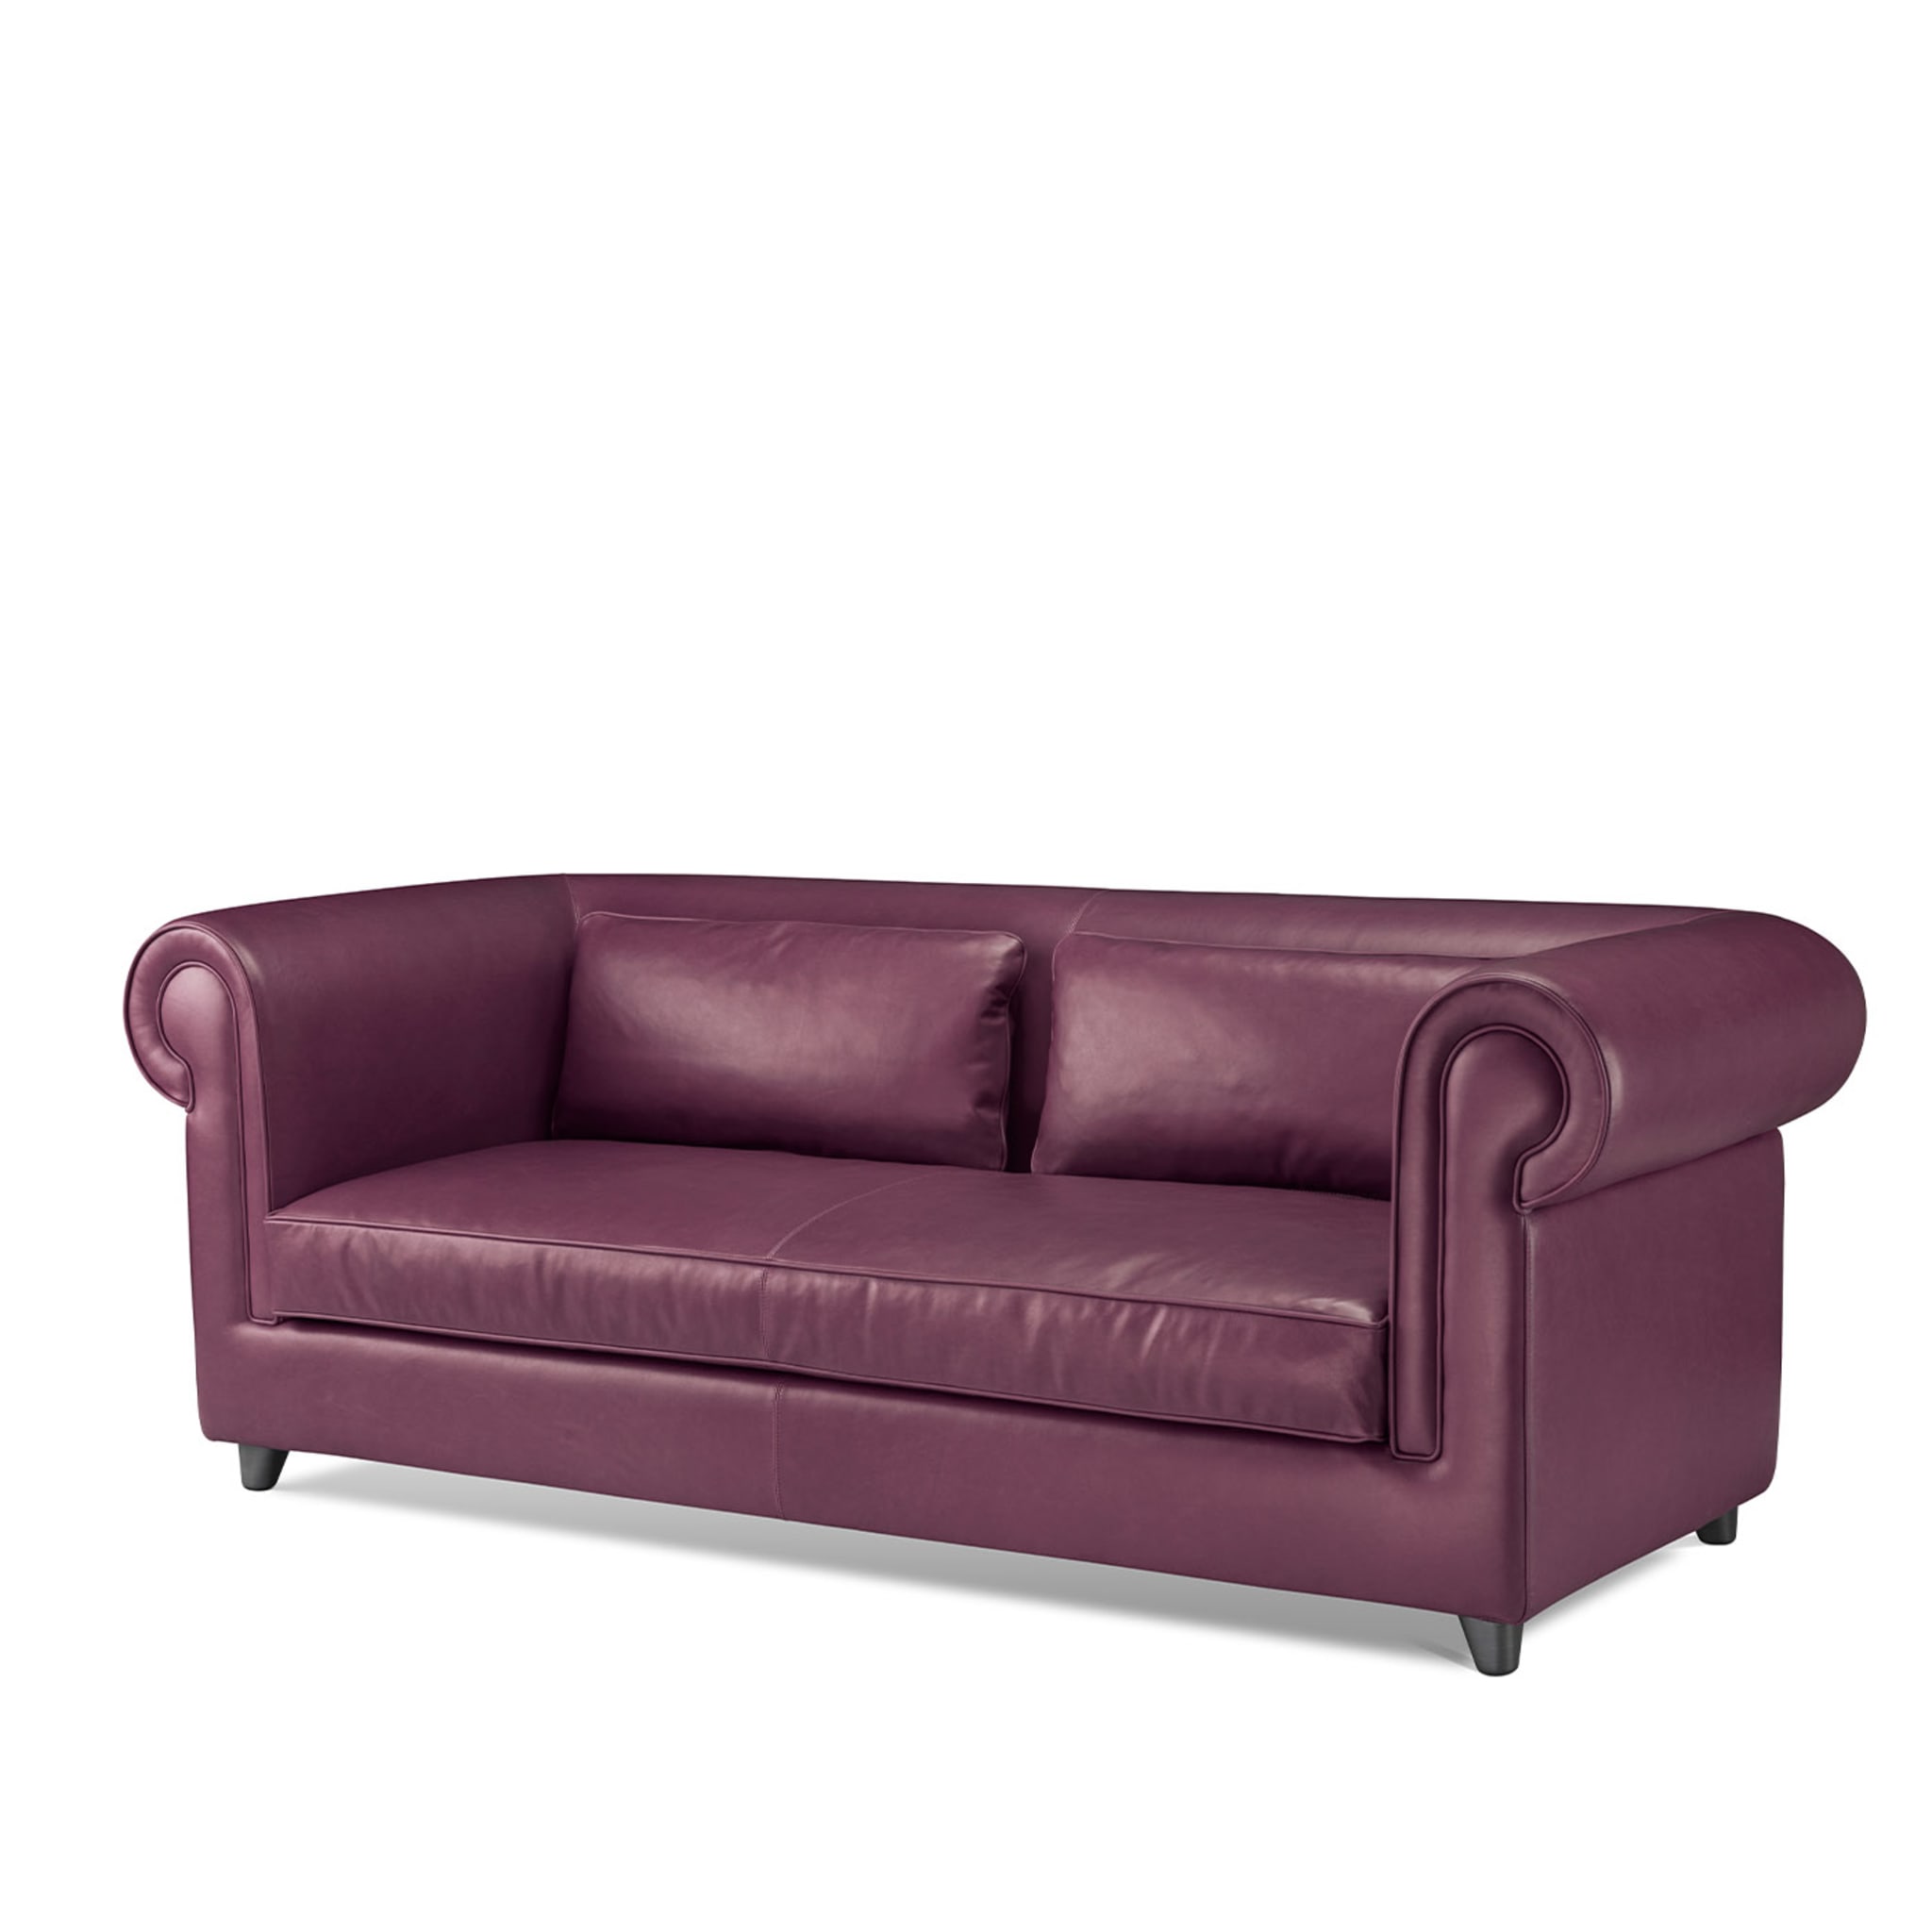 Portofino 2-sitzer lila sofa by Stefano Giovannoni - Alternative Ansicht 2